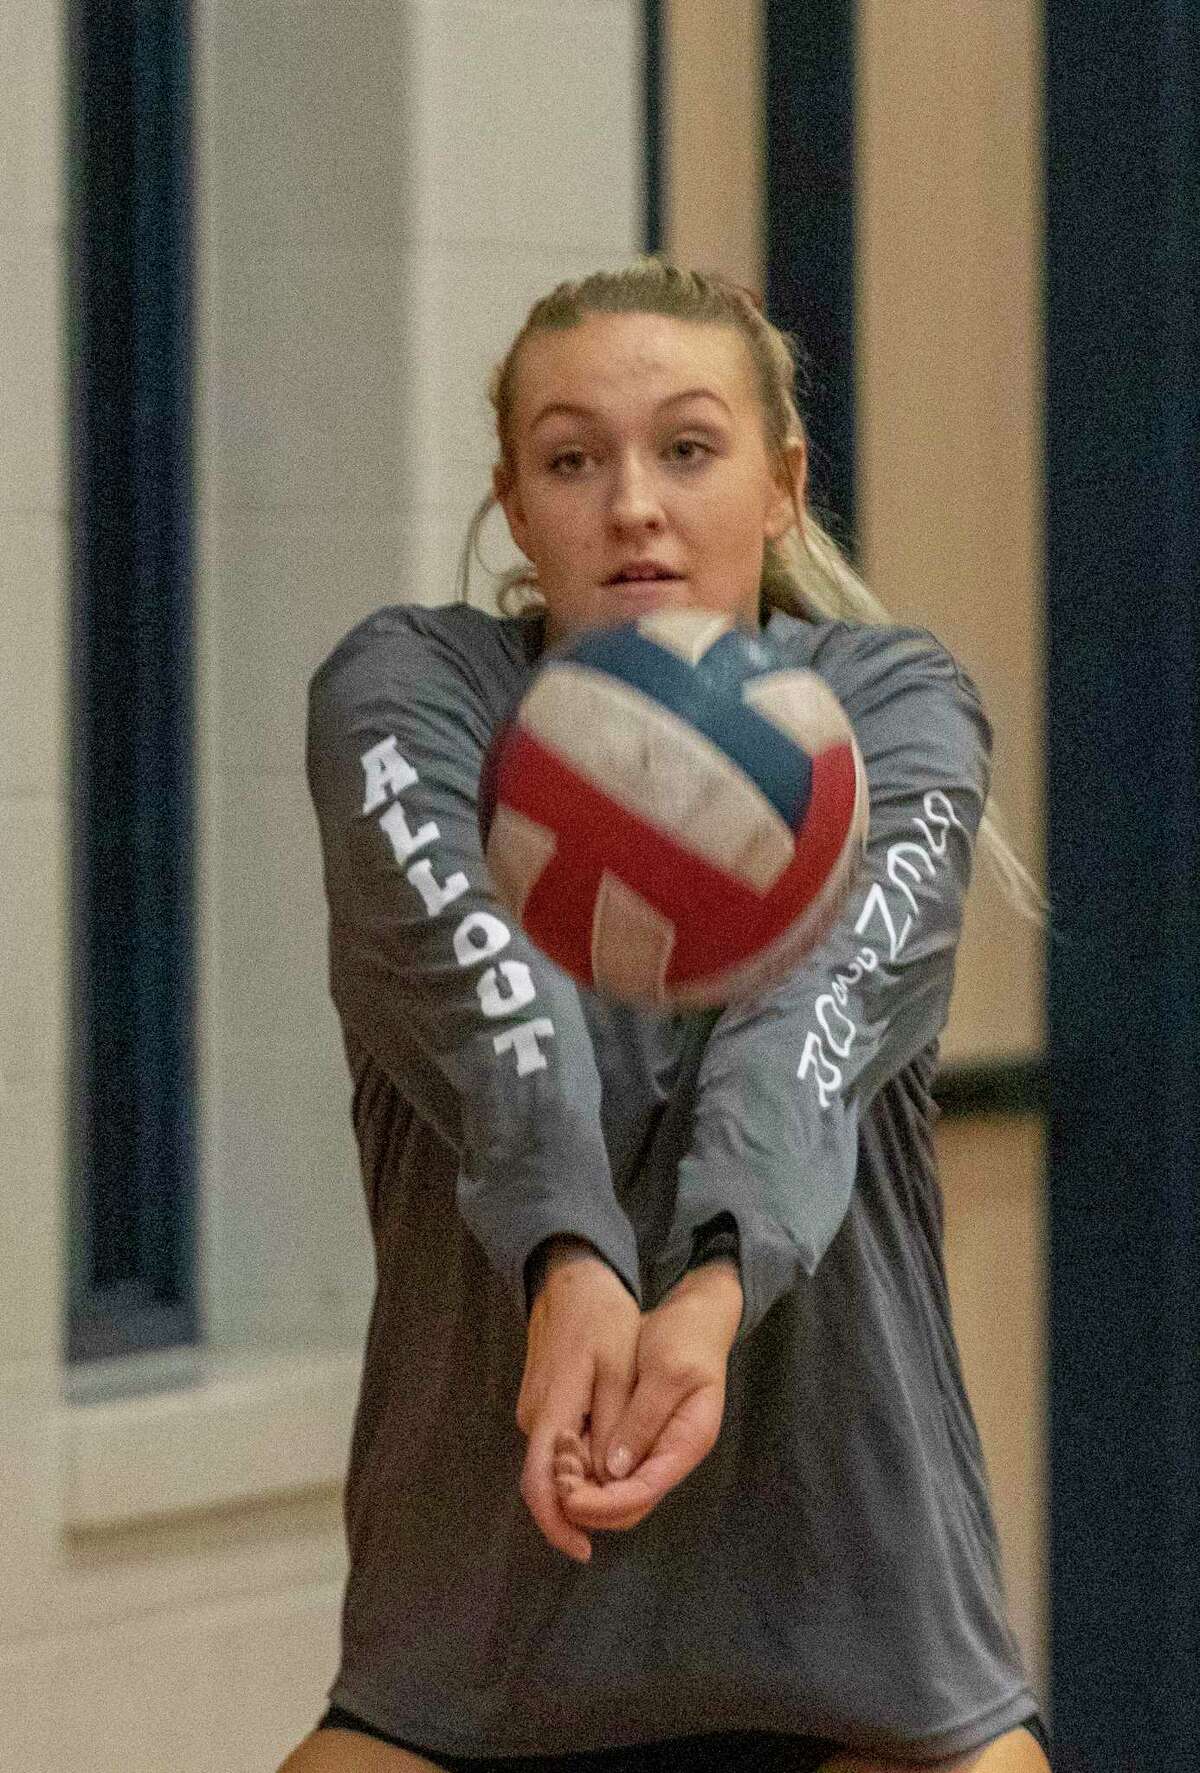 Oak Ridge senior Emma Smith (17) warms up before a district 15-6A volleyball match at Oak Ridge High School in Oak Ridge North.